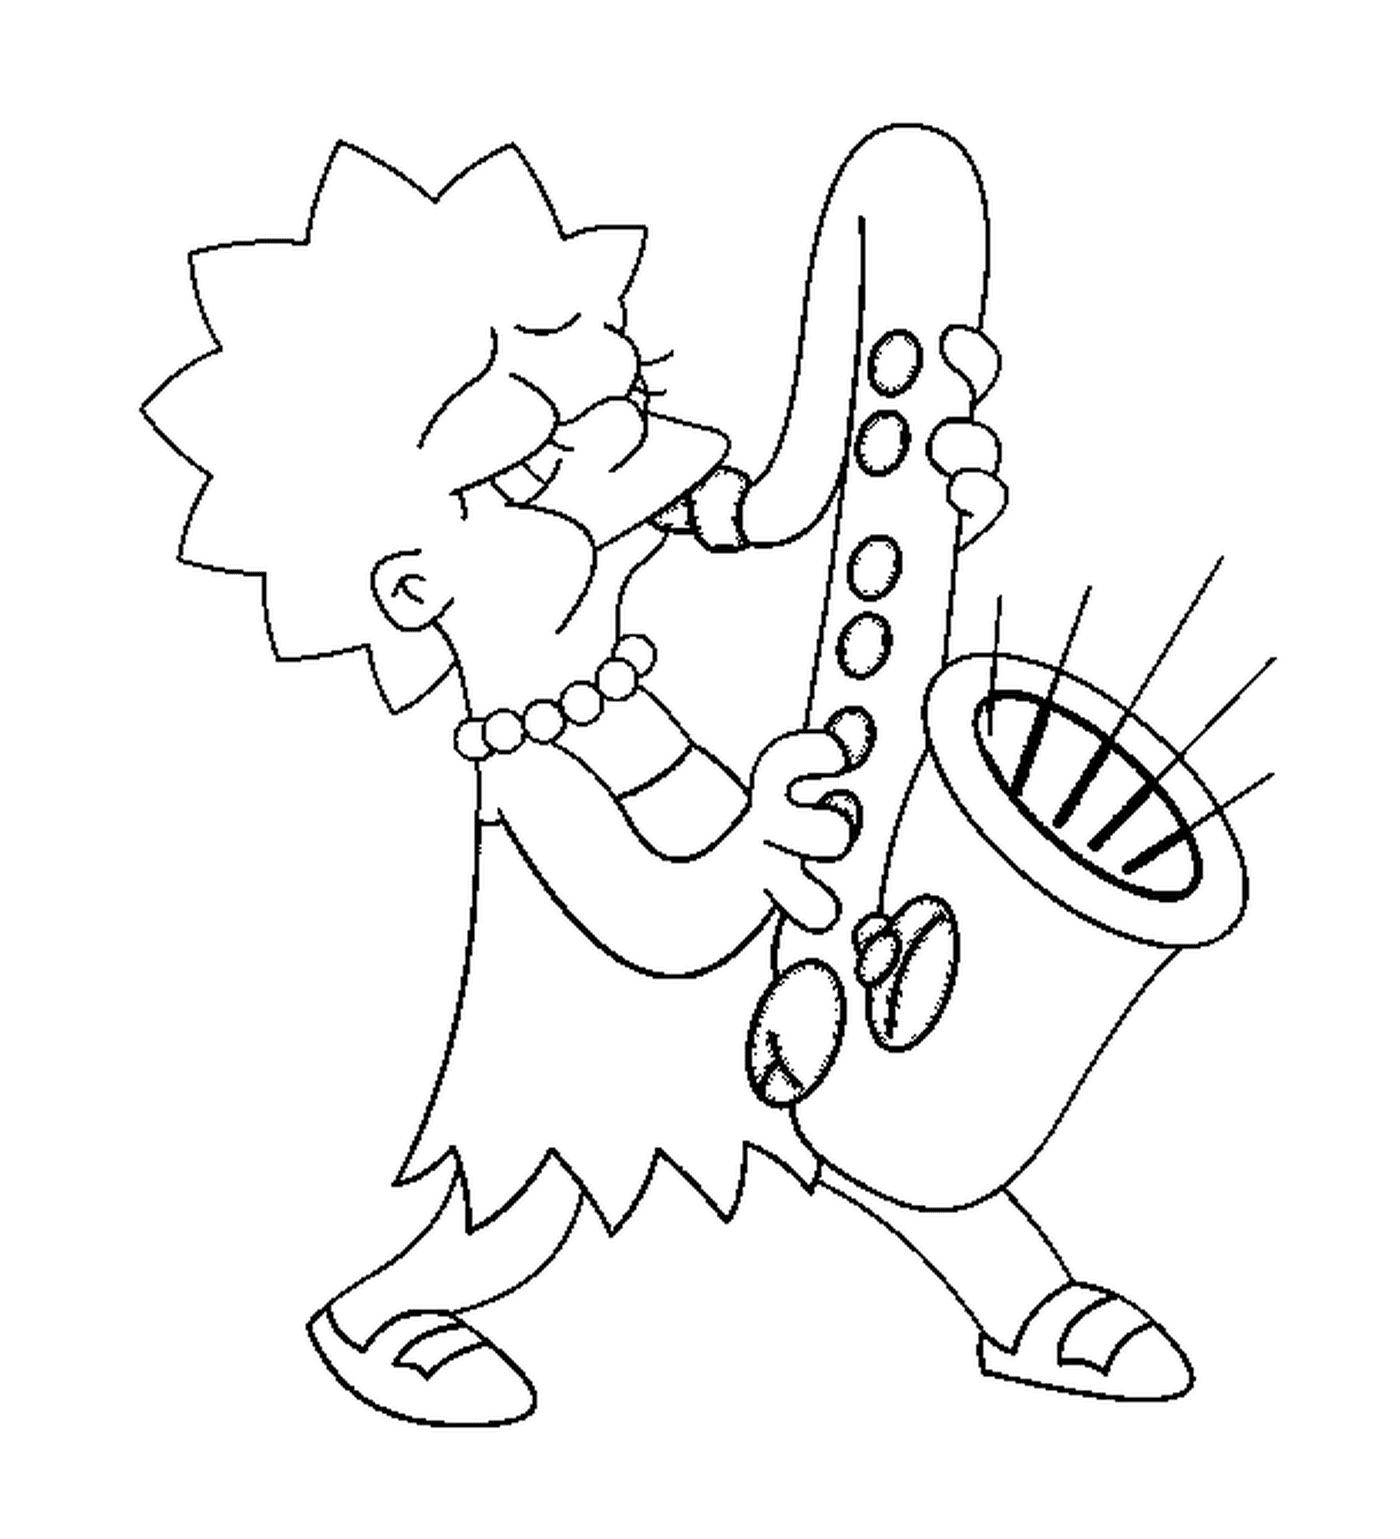  Lisa toca saxofone harmonioso 